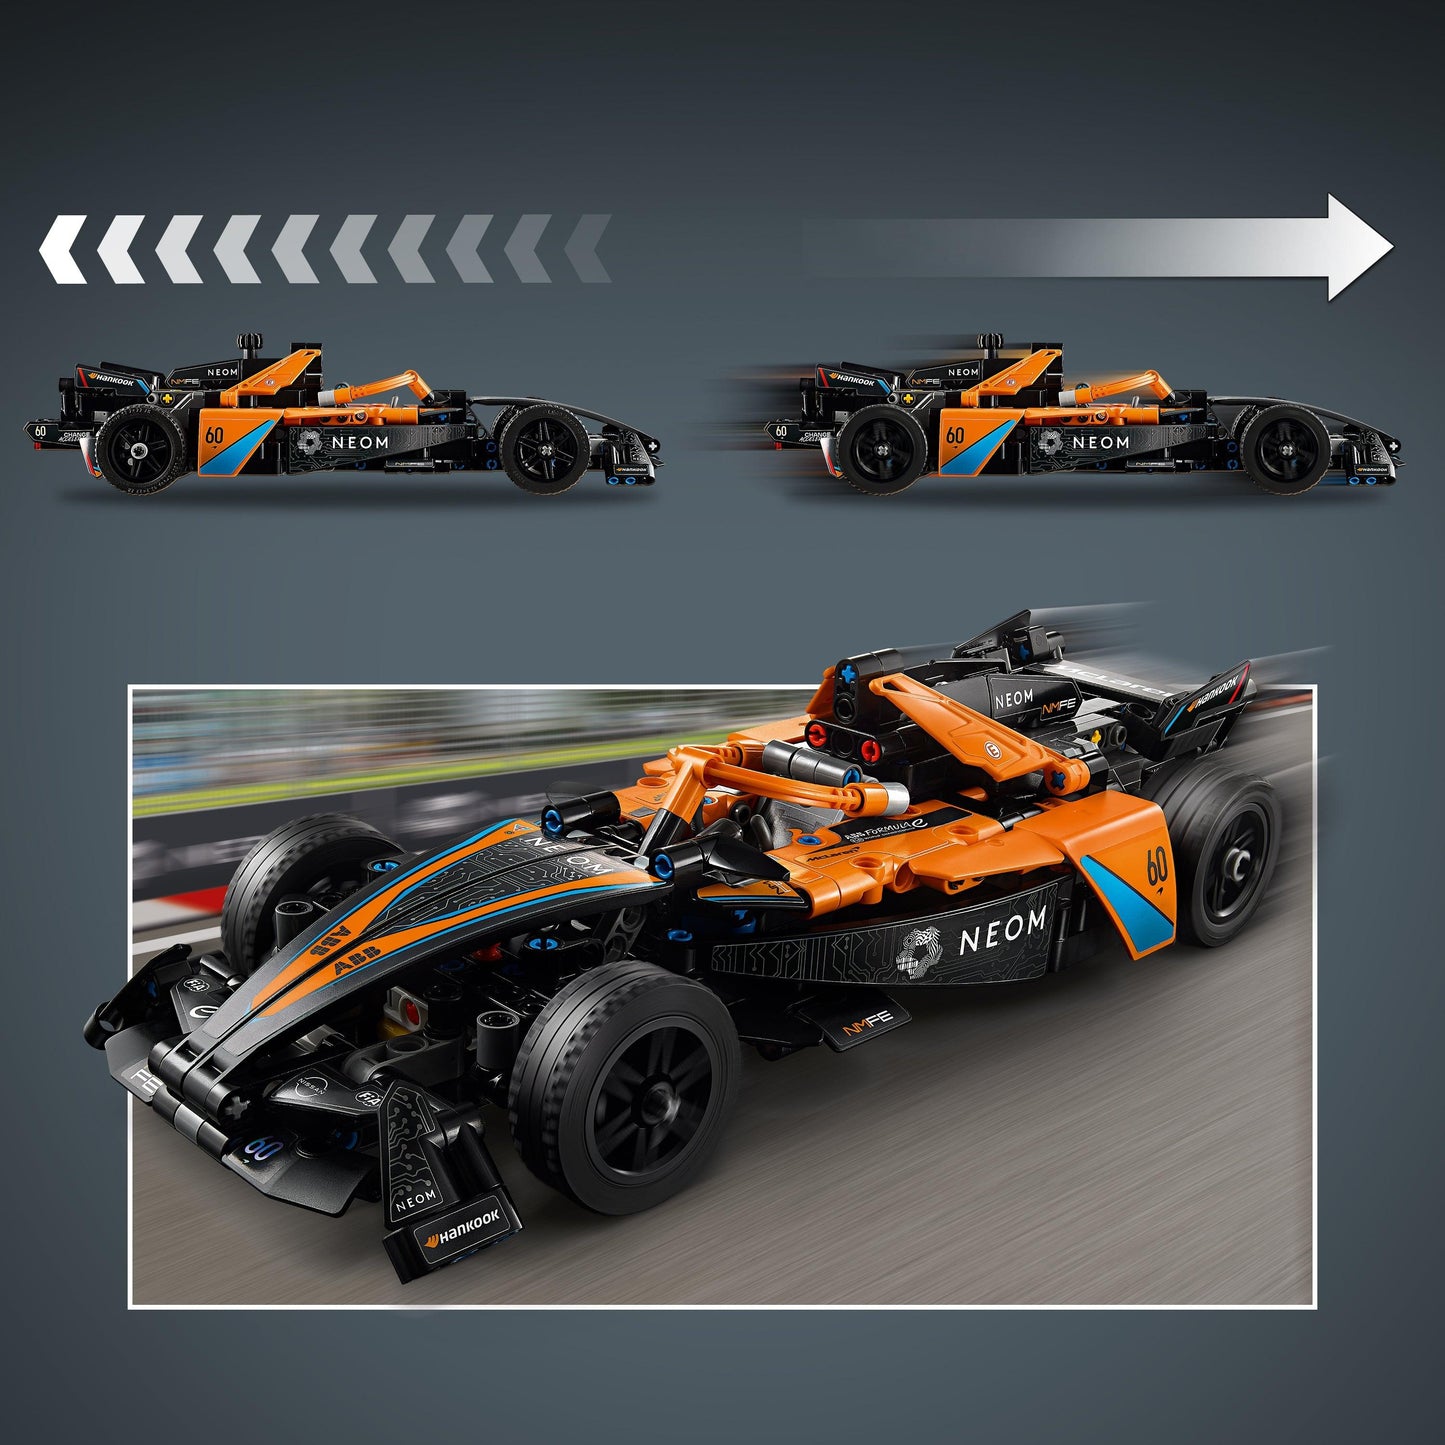 LEGO NEOM McLaren Formula E racewagen 42169 Technic | 2TTOYS ✓ Official shop<br>